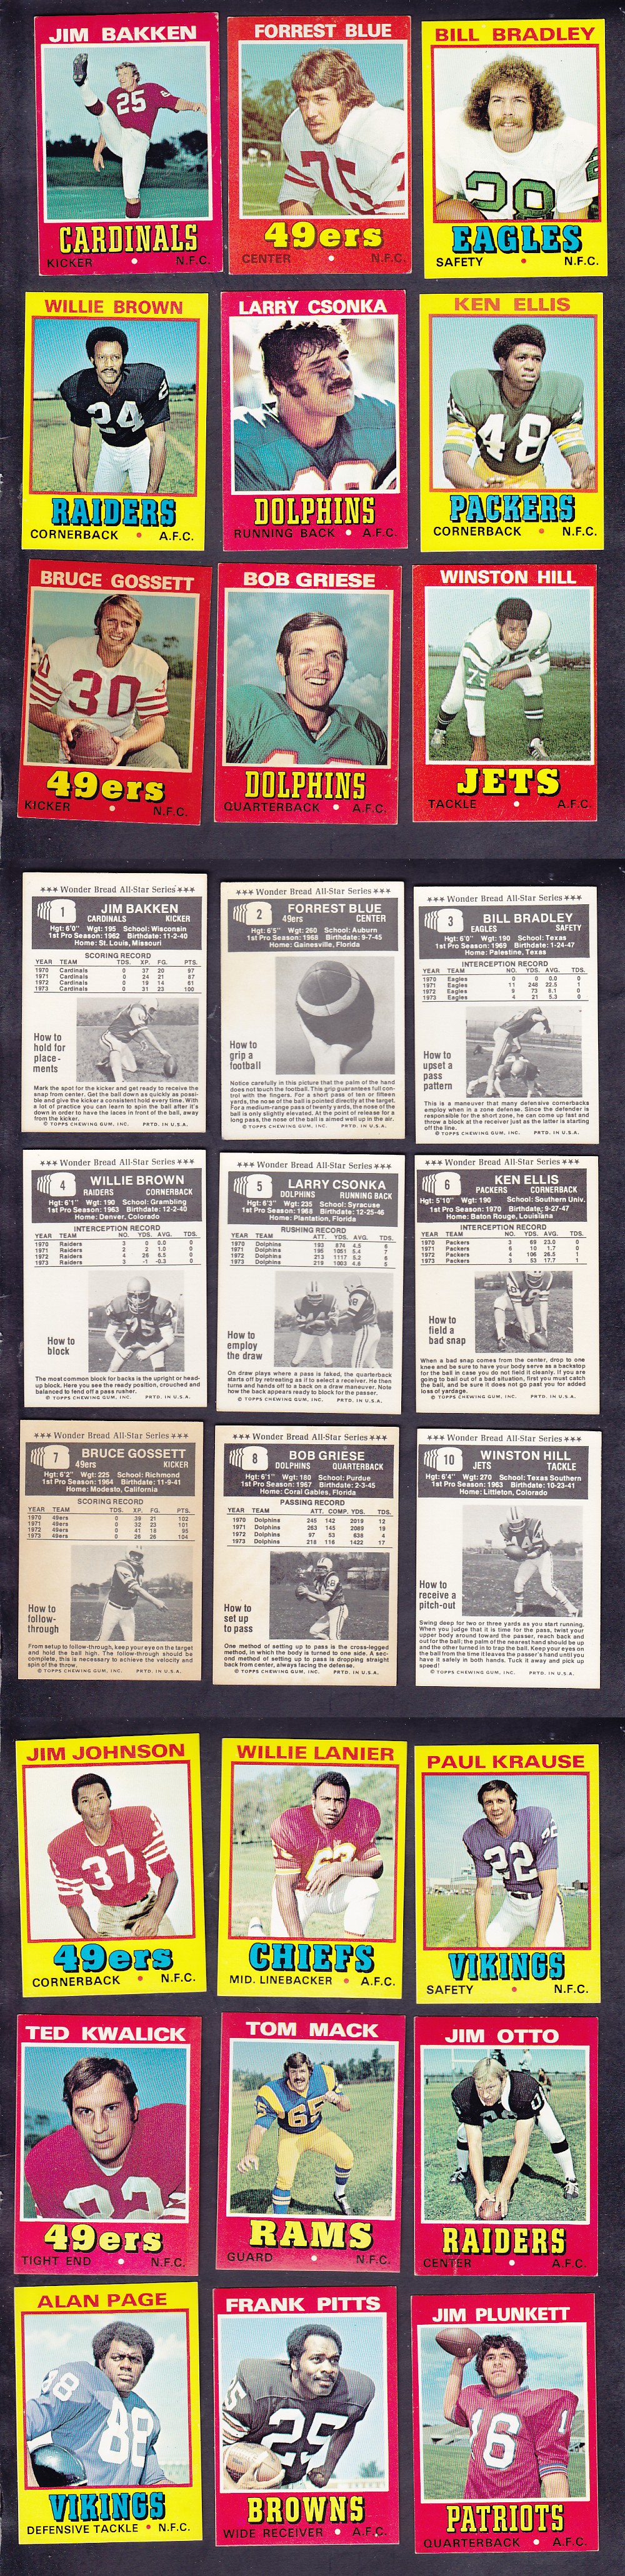 1974 NFL WONDER BREAD FOOTBALL CARD FULL SET 30/30 photo